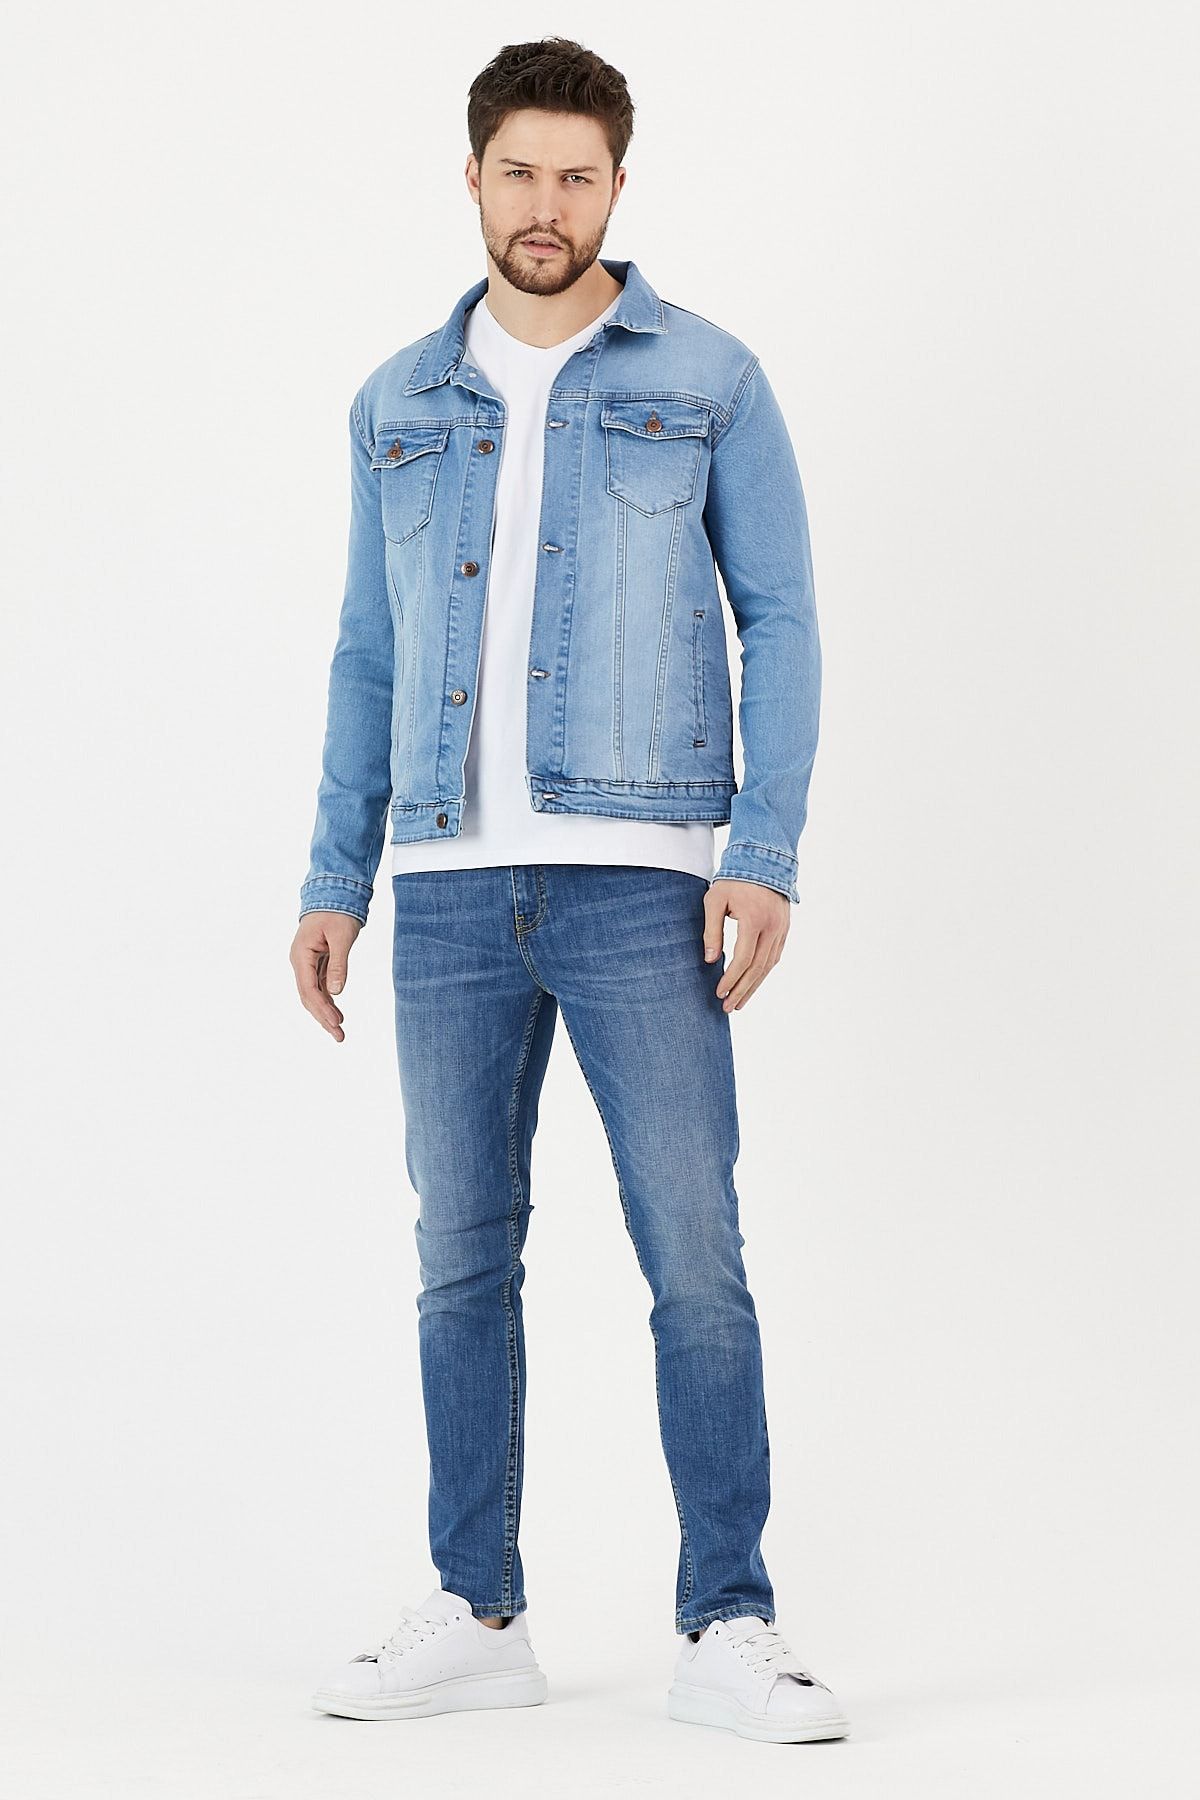 Y&G jeans Erkek Buz Mavi Renk Slim Fit Kot Ceket